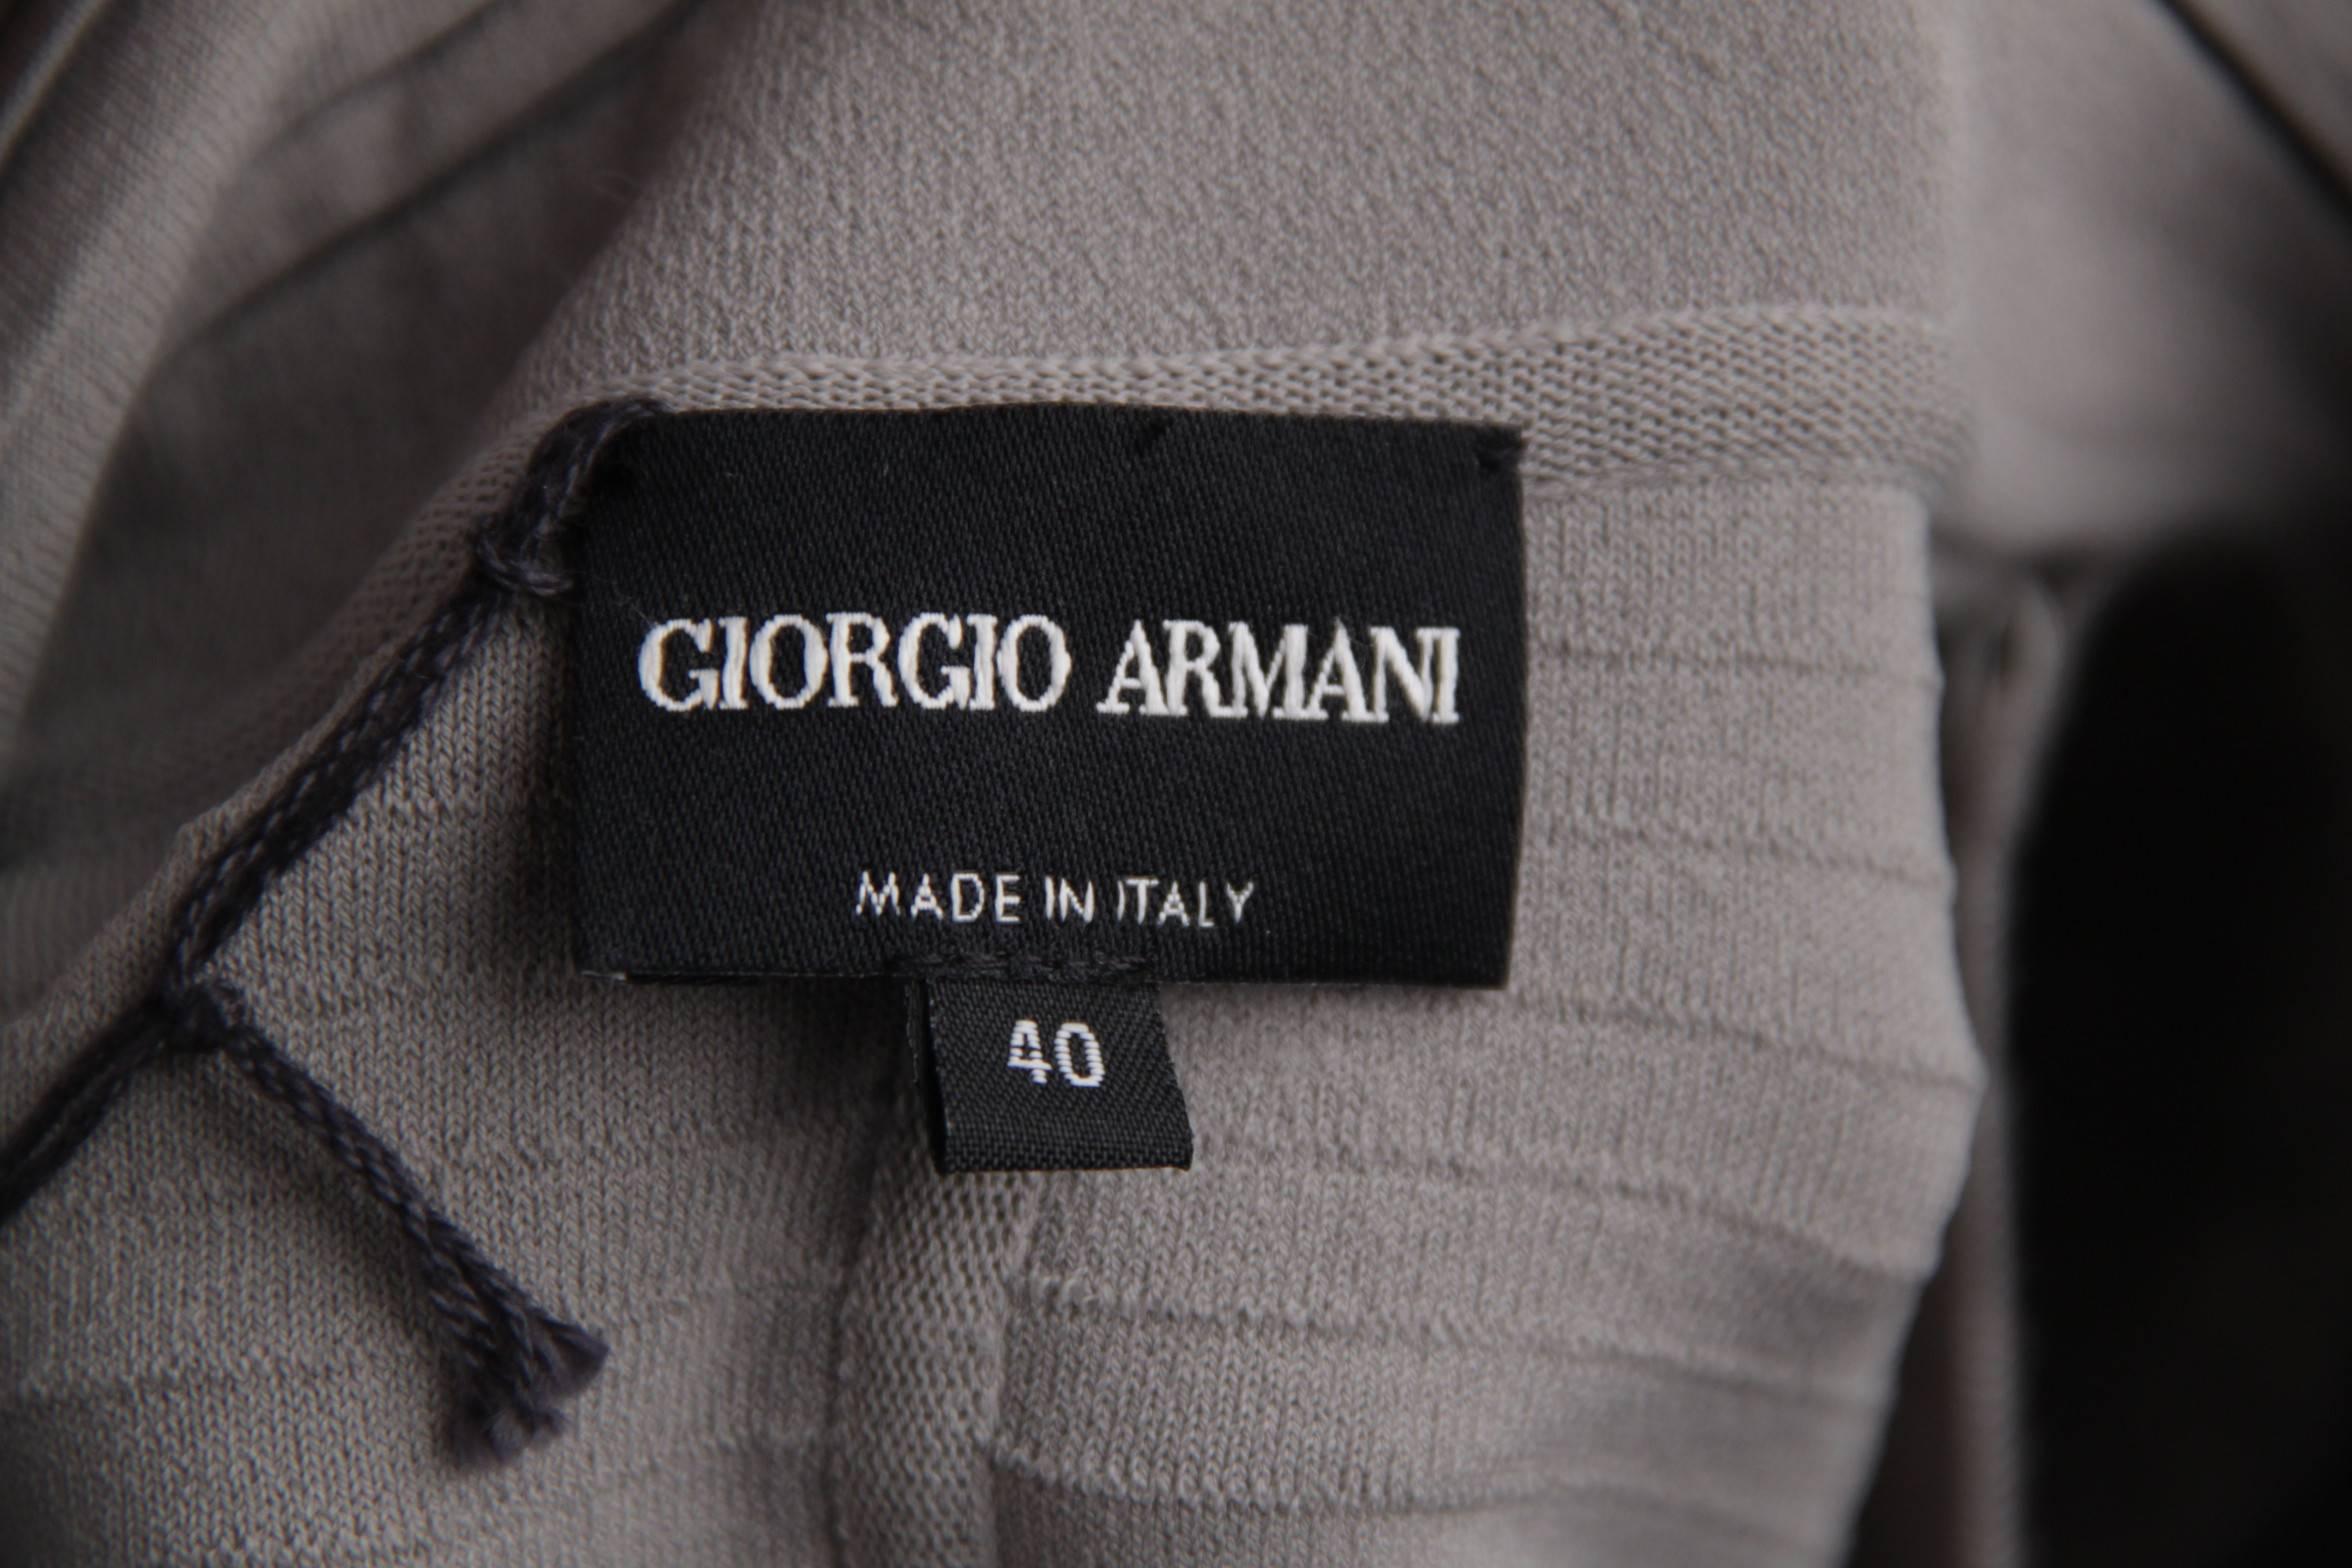 GIORGIO ARMANI BLACK LABEL Gray TEXTURED BLAZER Jacket SIZE 40 IT 3